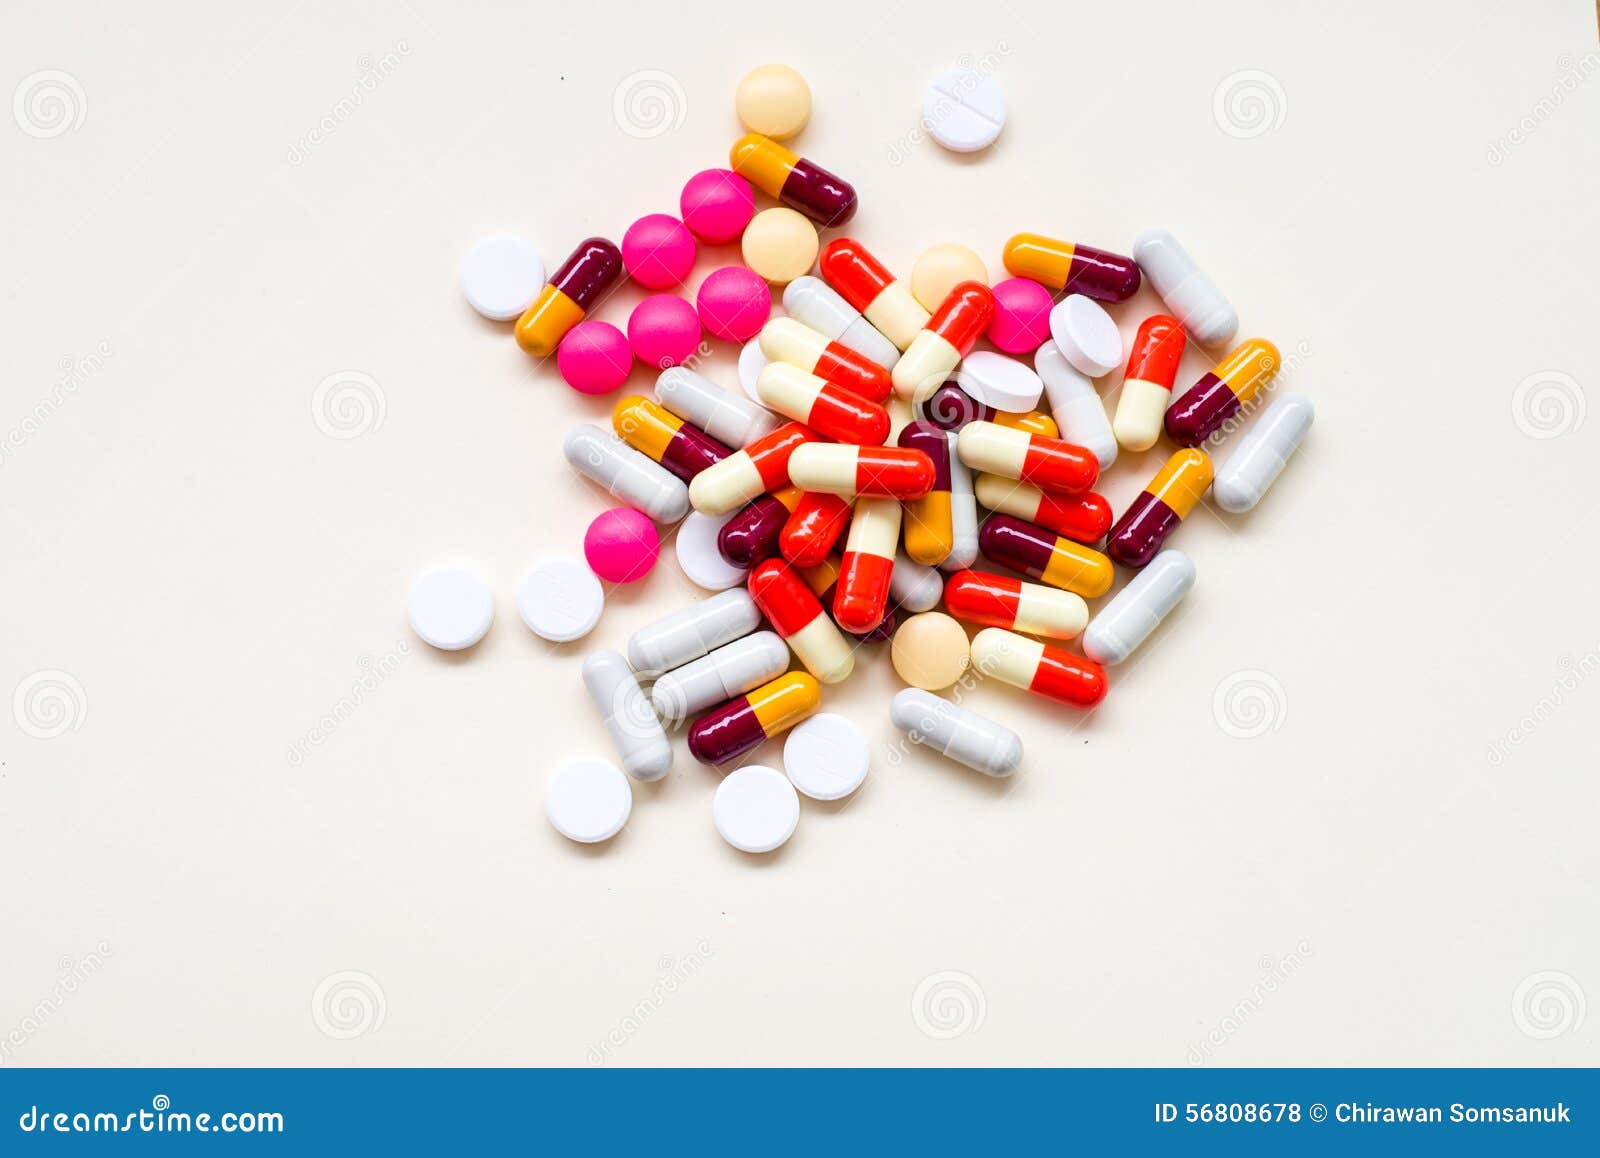 diferent tablets pills capsule